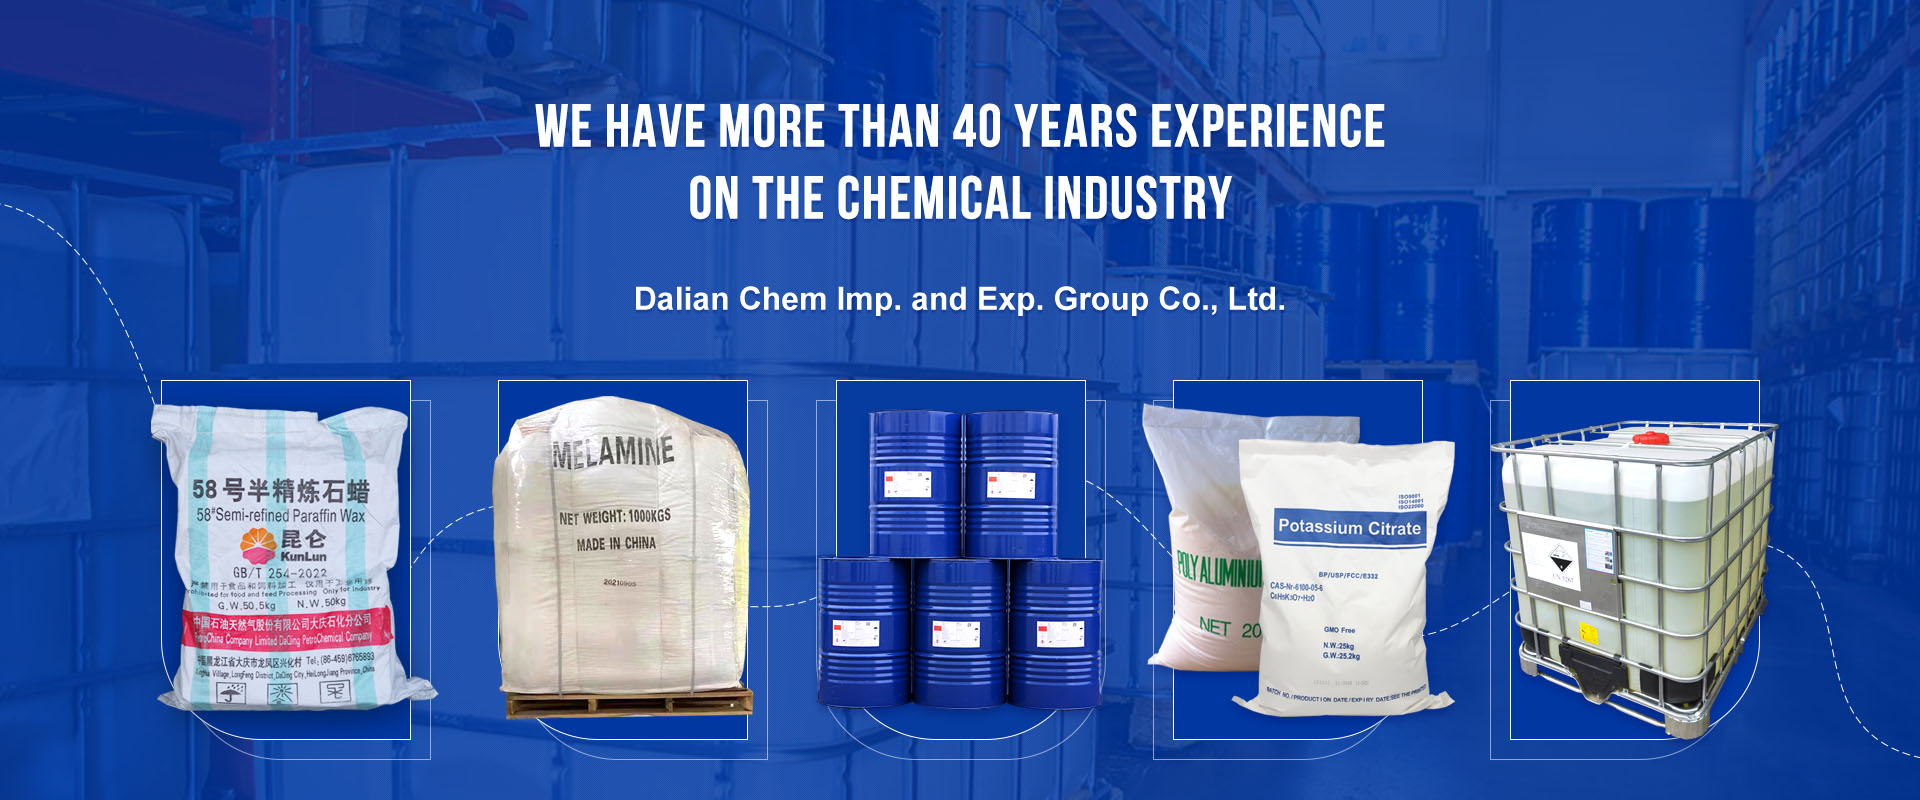 Dalian Chem Imp. and Exp. Group Co., Ltd.